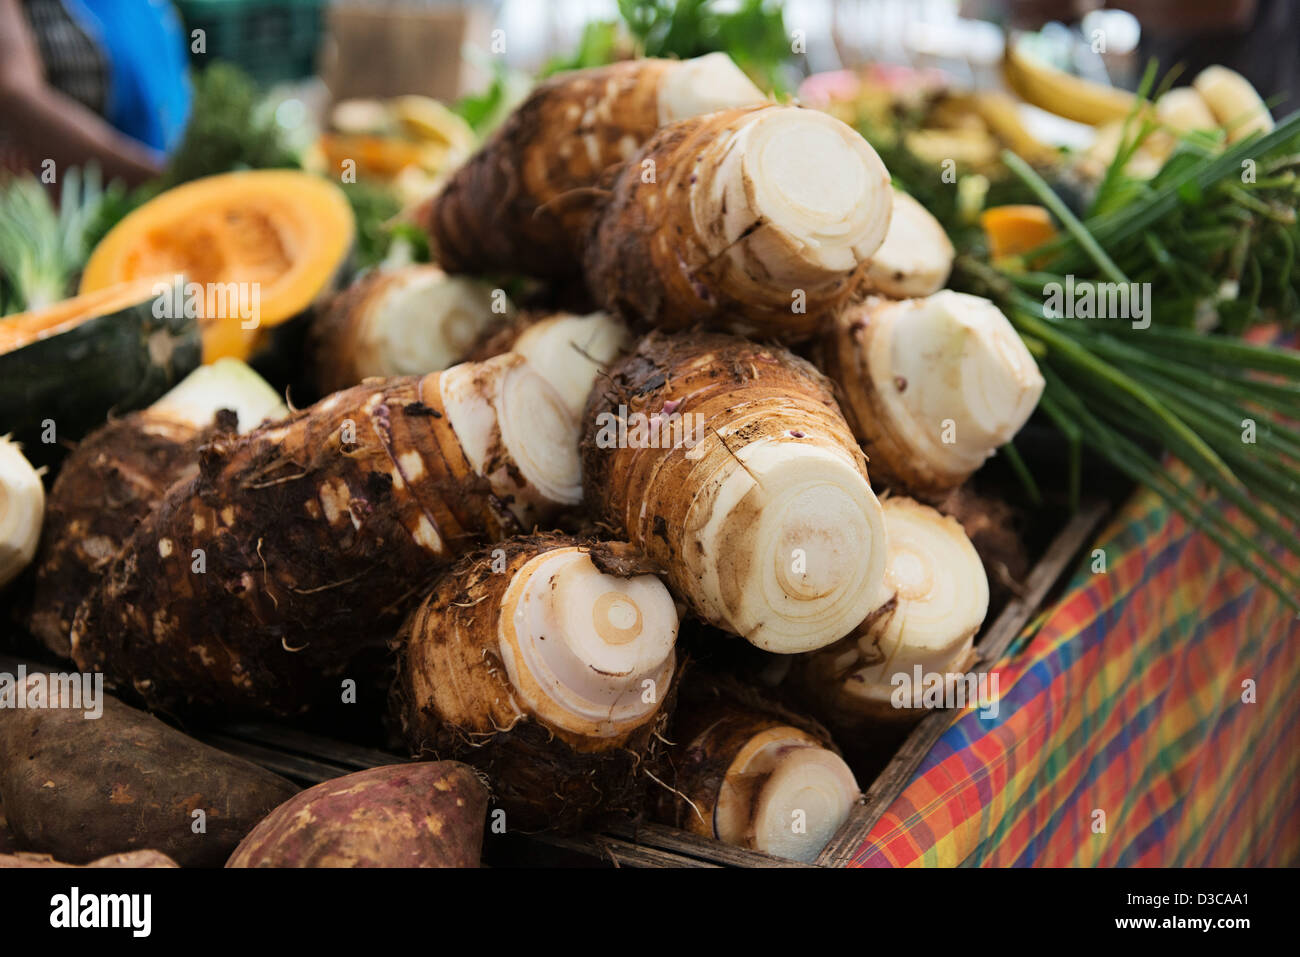 Tropical fruits and vegetables at Fort-de-France market, Martinique Island, Caribbean Sea, Lesser Antilles, France Stock Photo